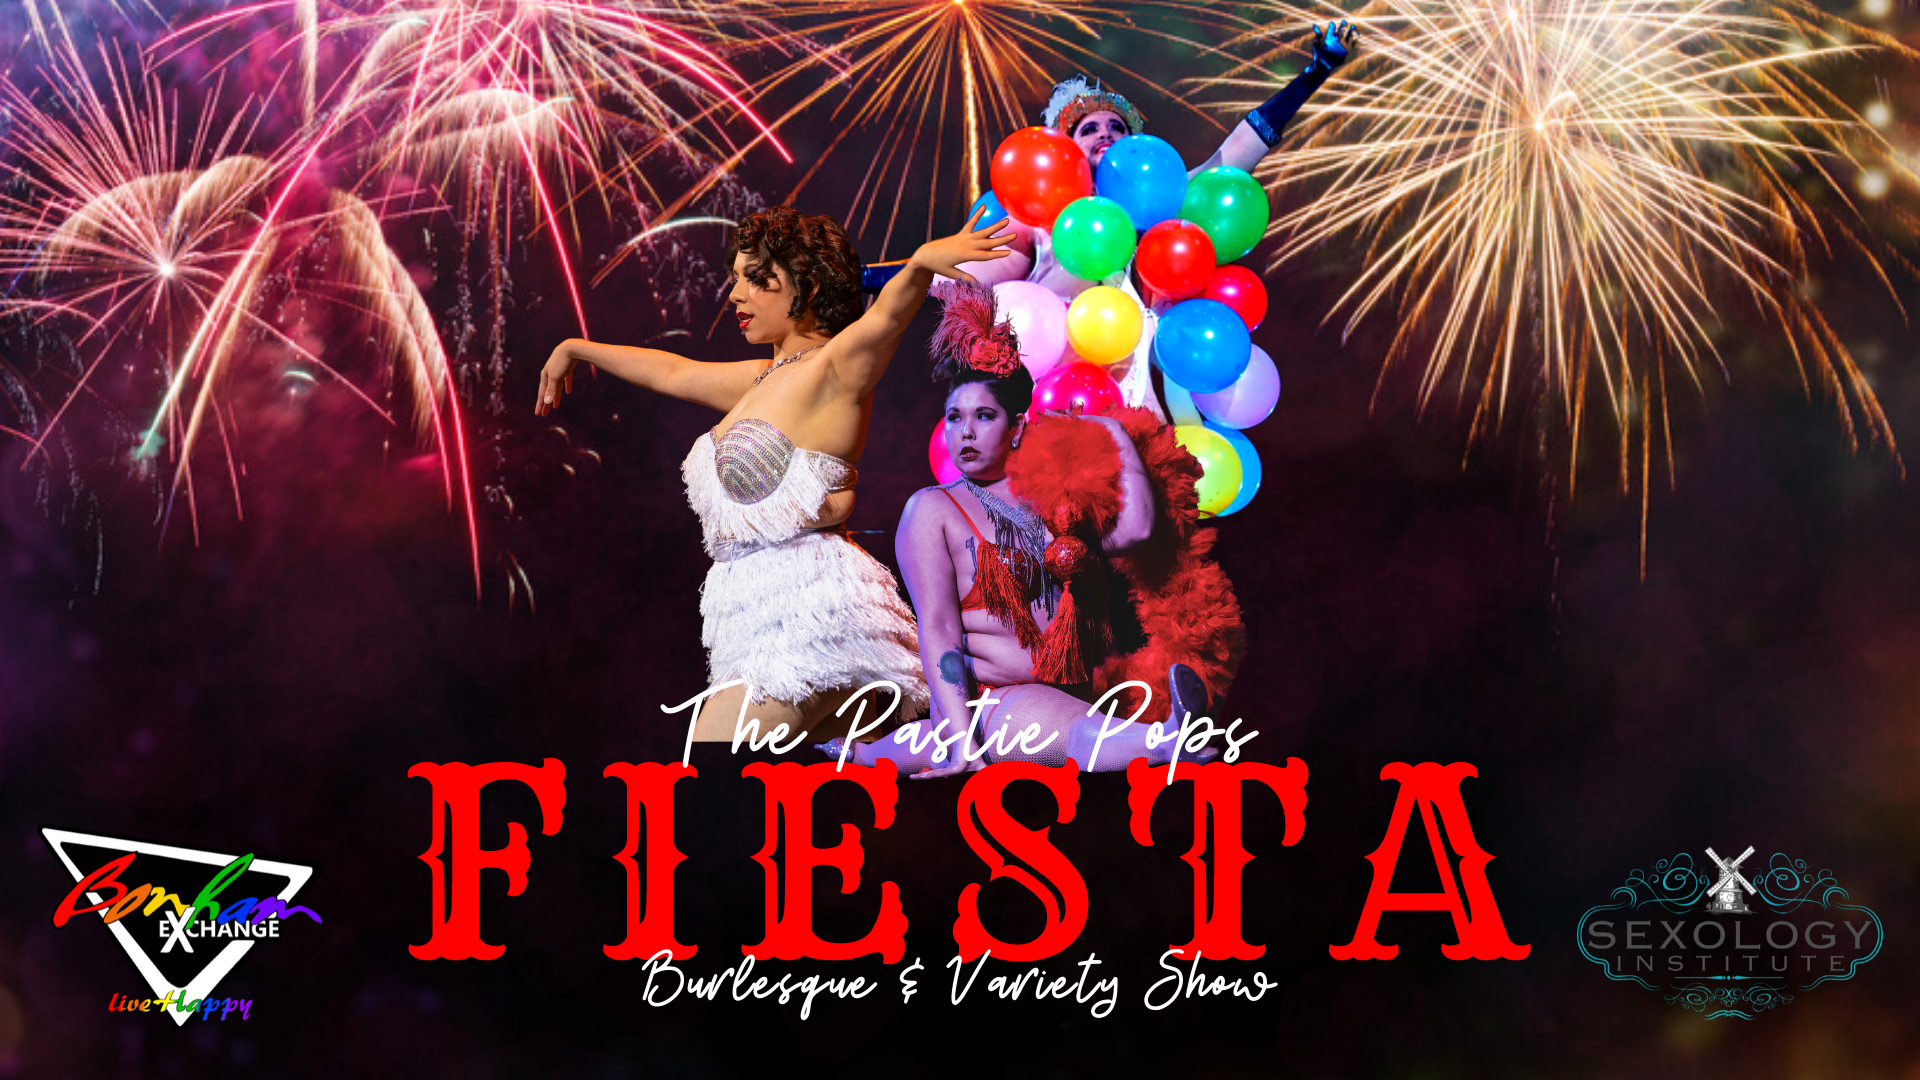 The Pastie Pops Fiesta Burlesque & Variety Show